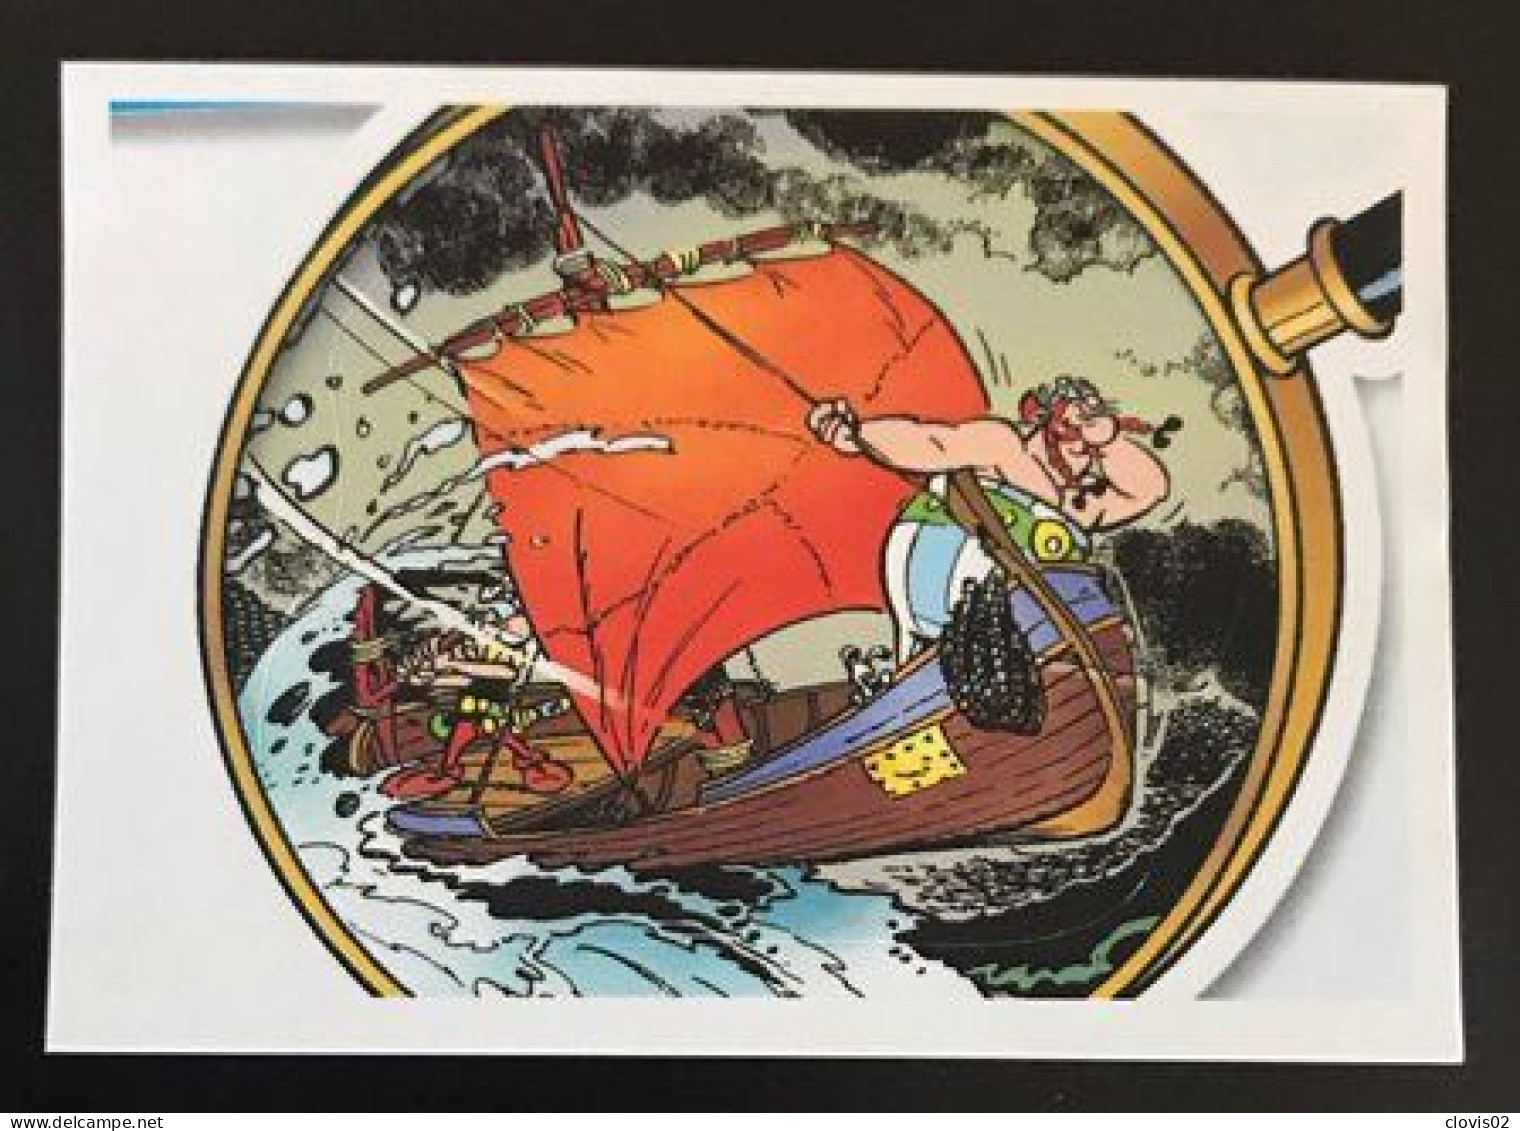 101 - PANINI Family Astérix 60 Ans D'aventures - Carrefour Sticker Vignette - French Edition